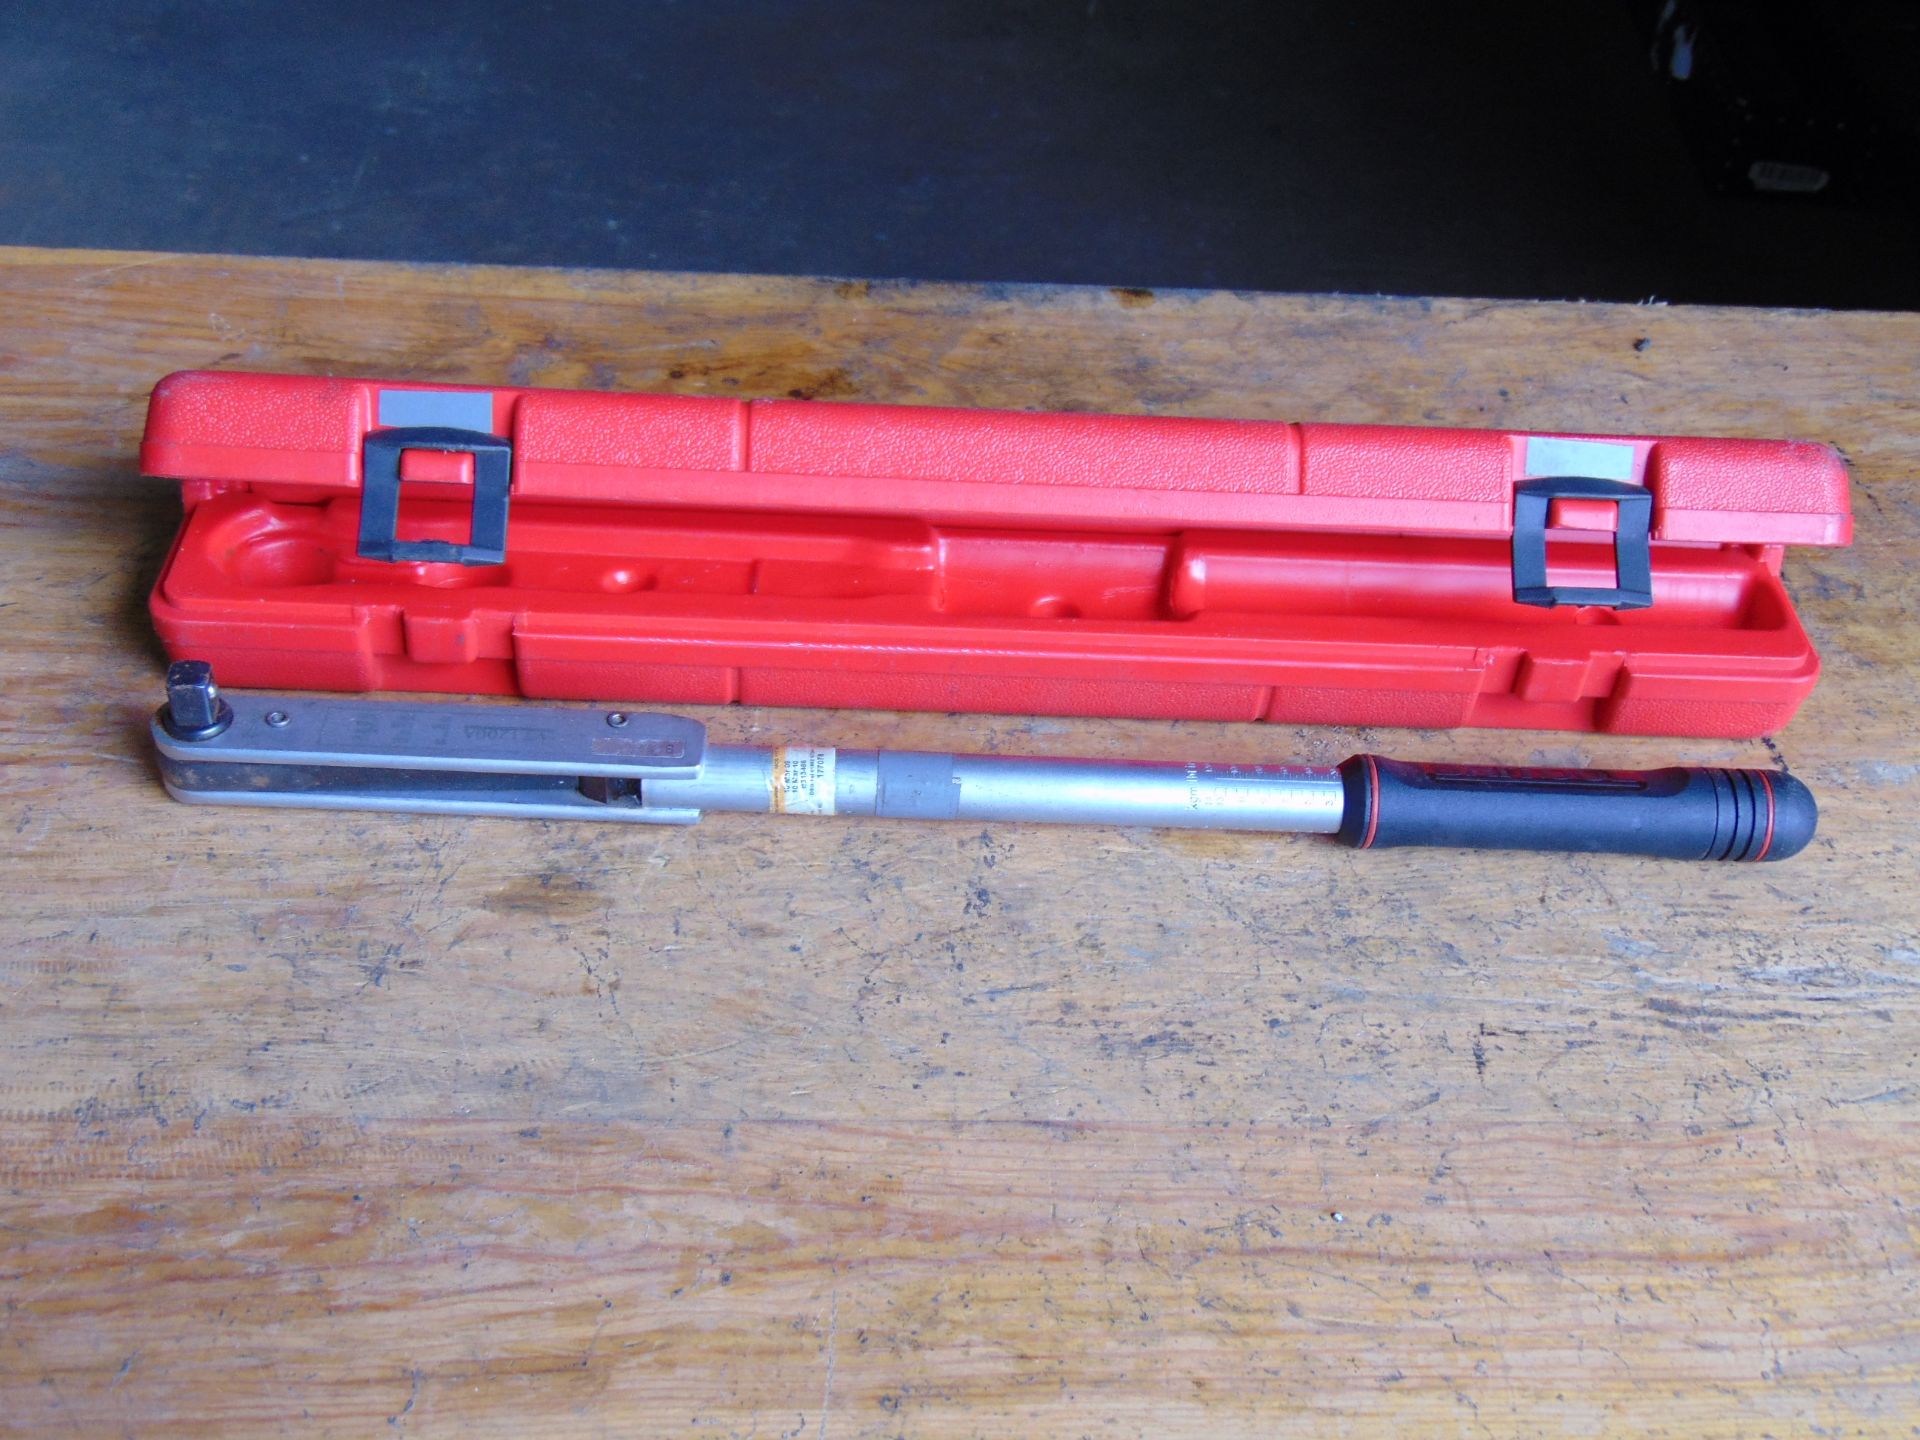 1 x Britool EVA 1200 A Torque Wrench in Case - Image 3 of 5